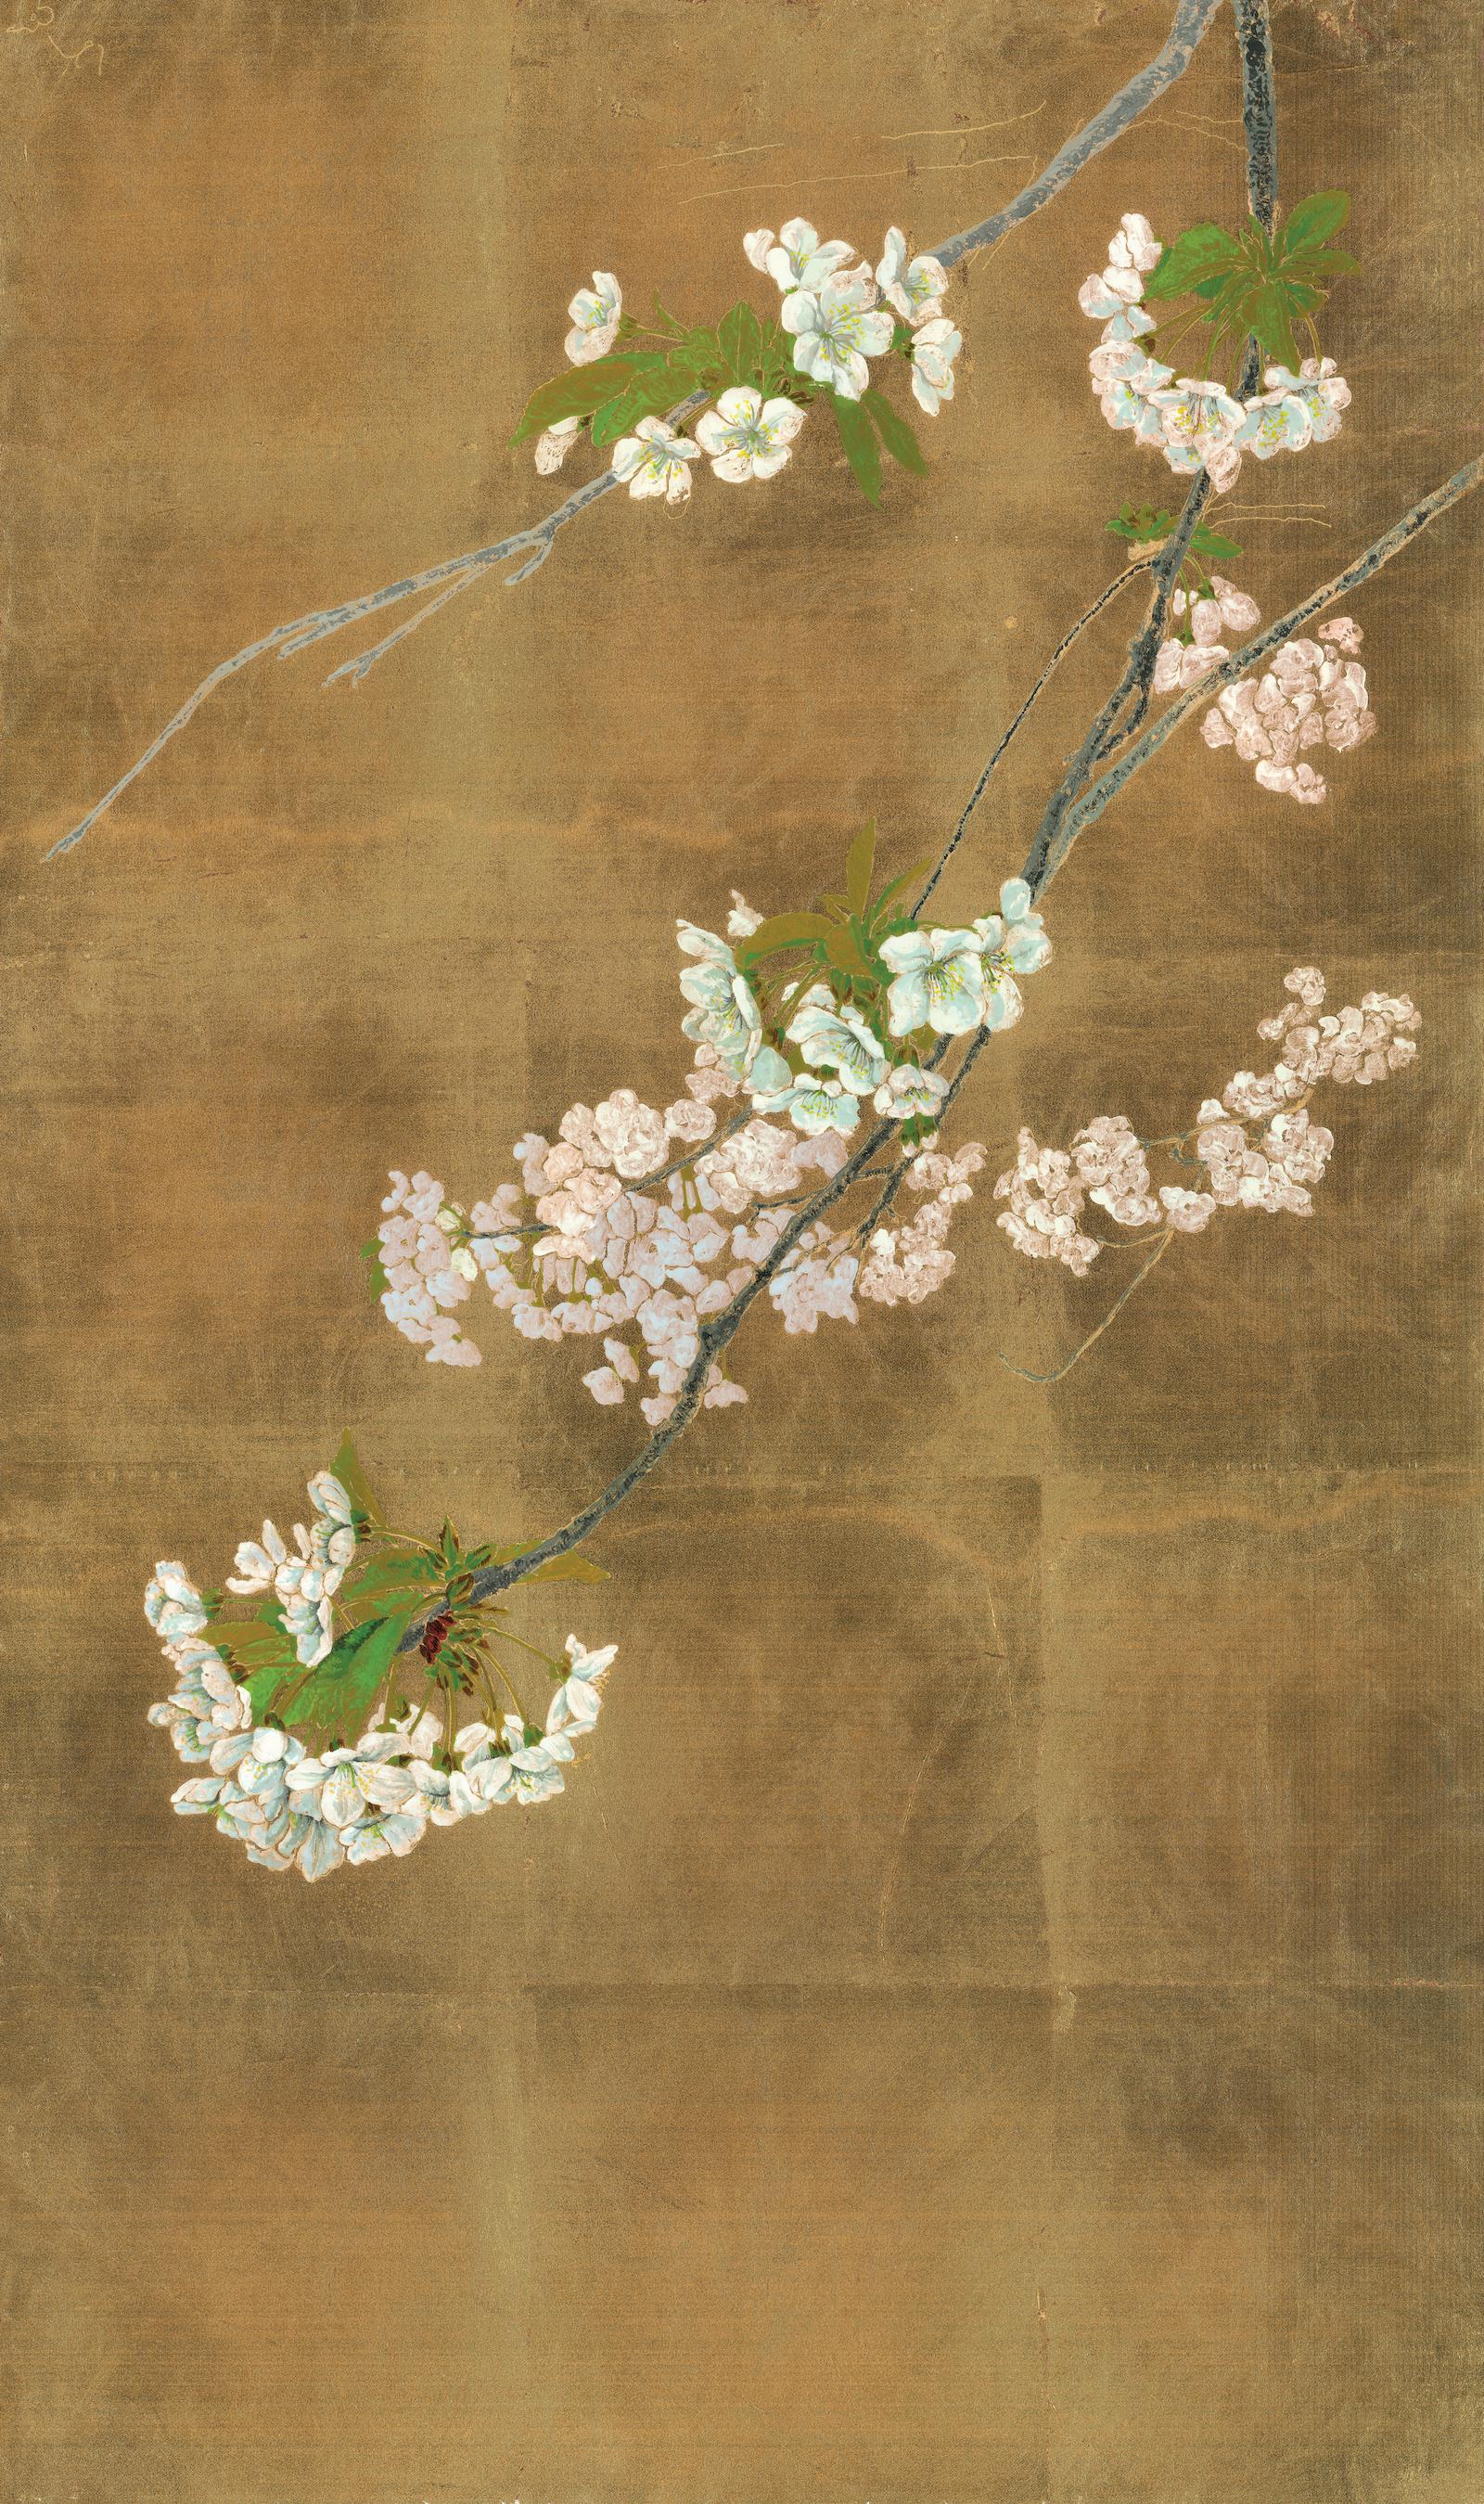 Cherry tree - Painting by Margherita Leoni